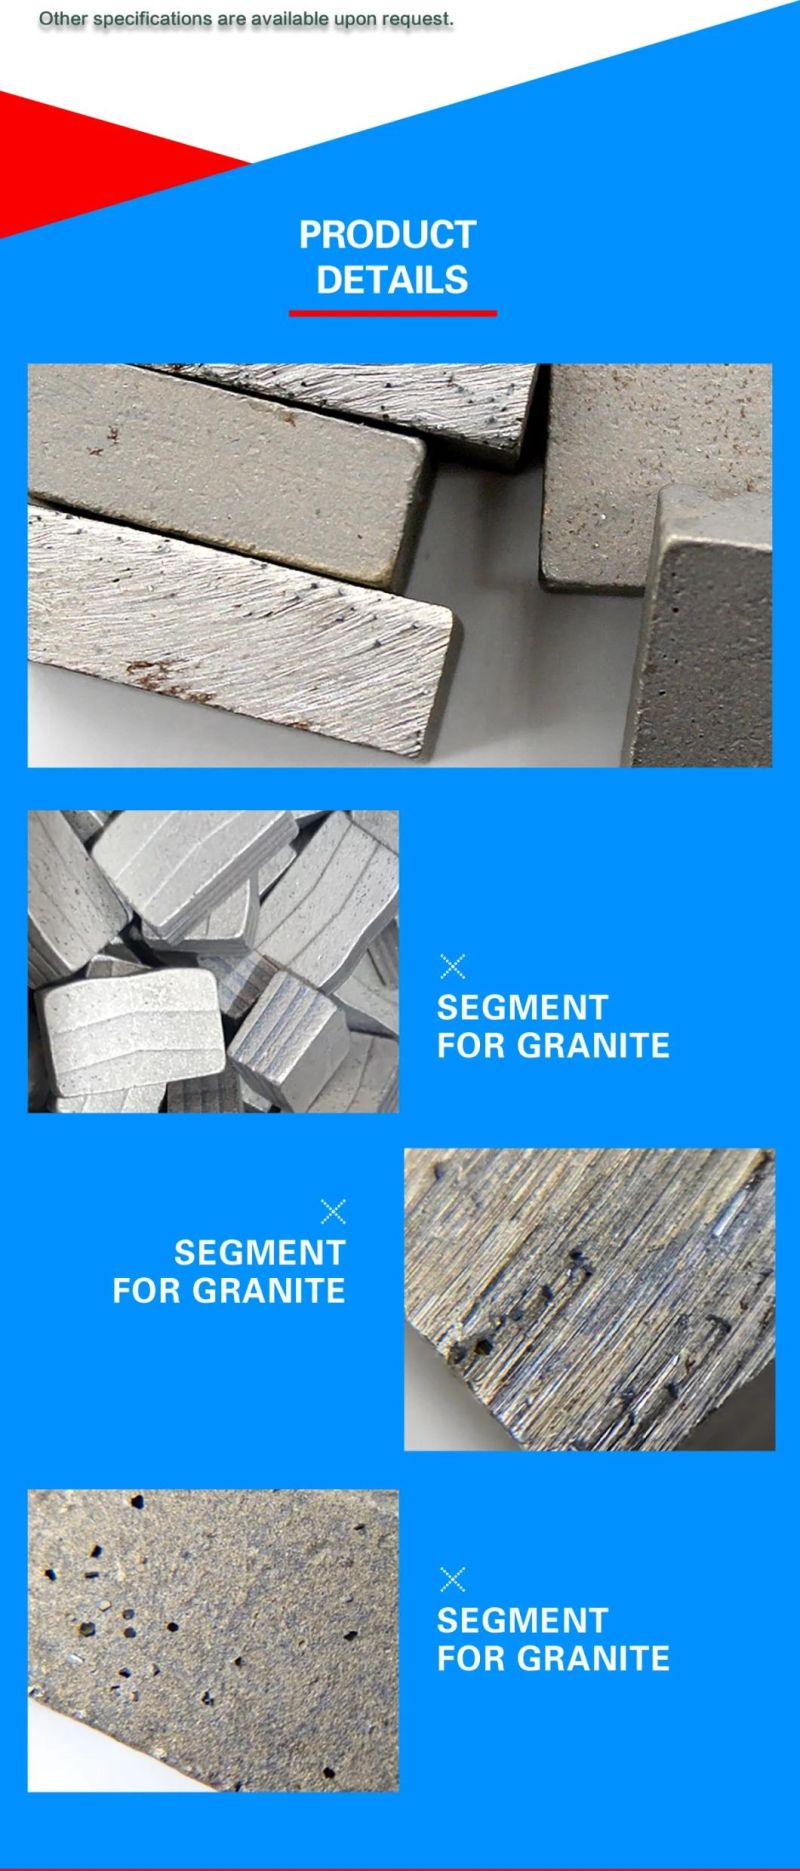 M Shape High Quality Diamond Segment for Granite, Stone Cutting with Good Sharpness